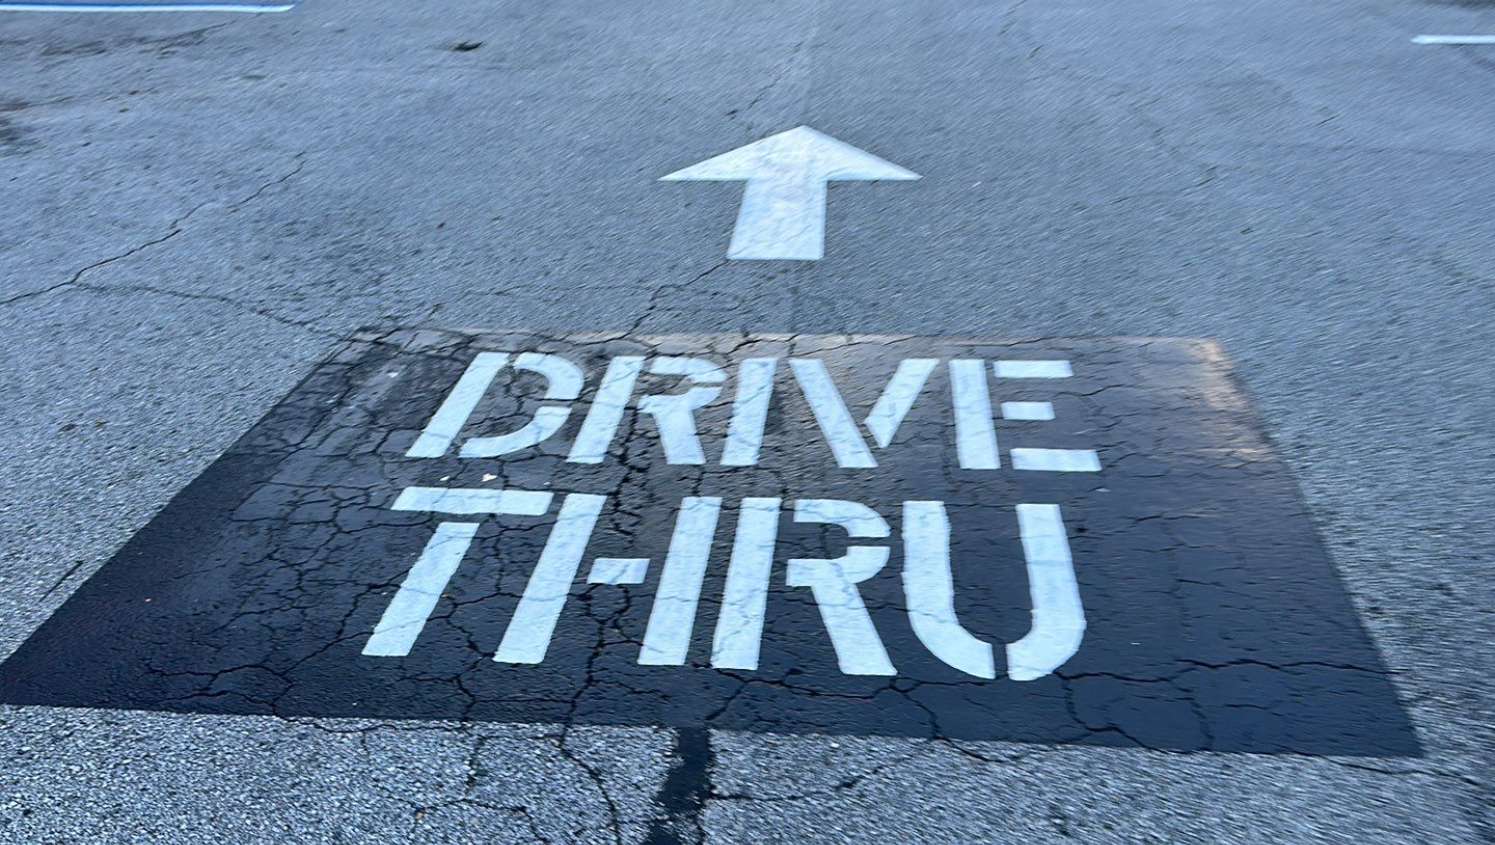 new drive thru markings